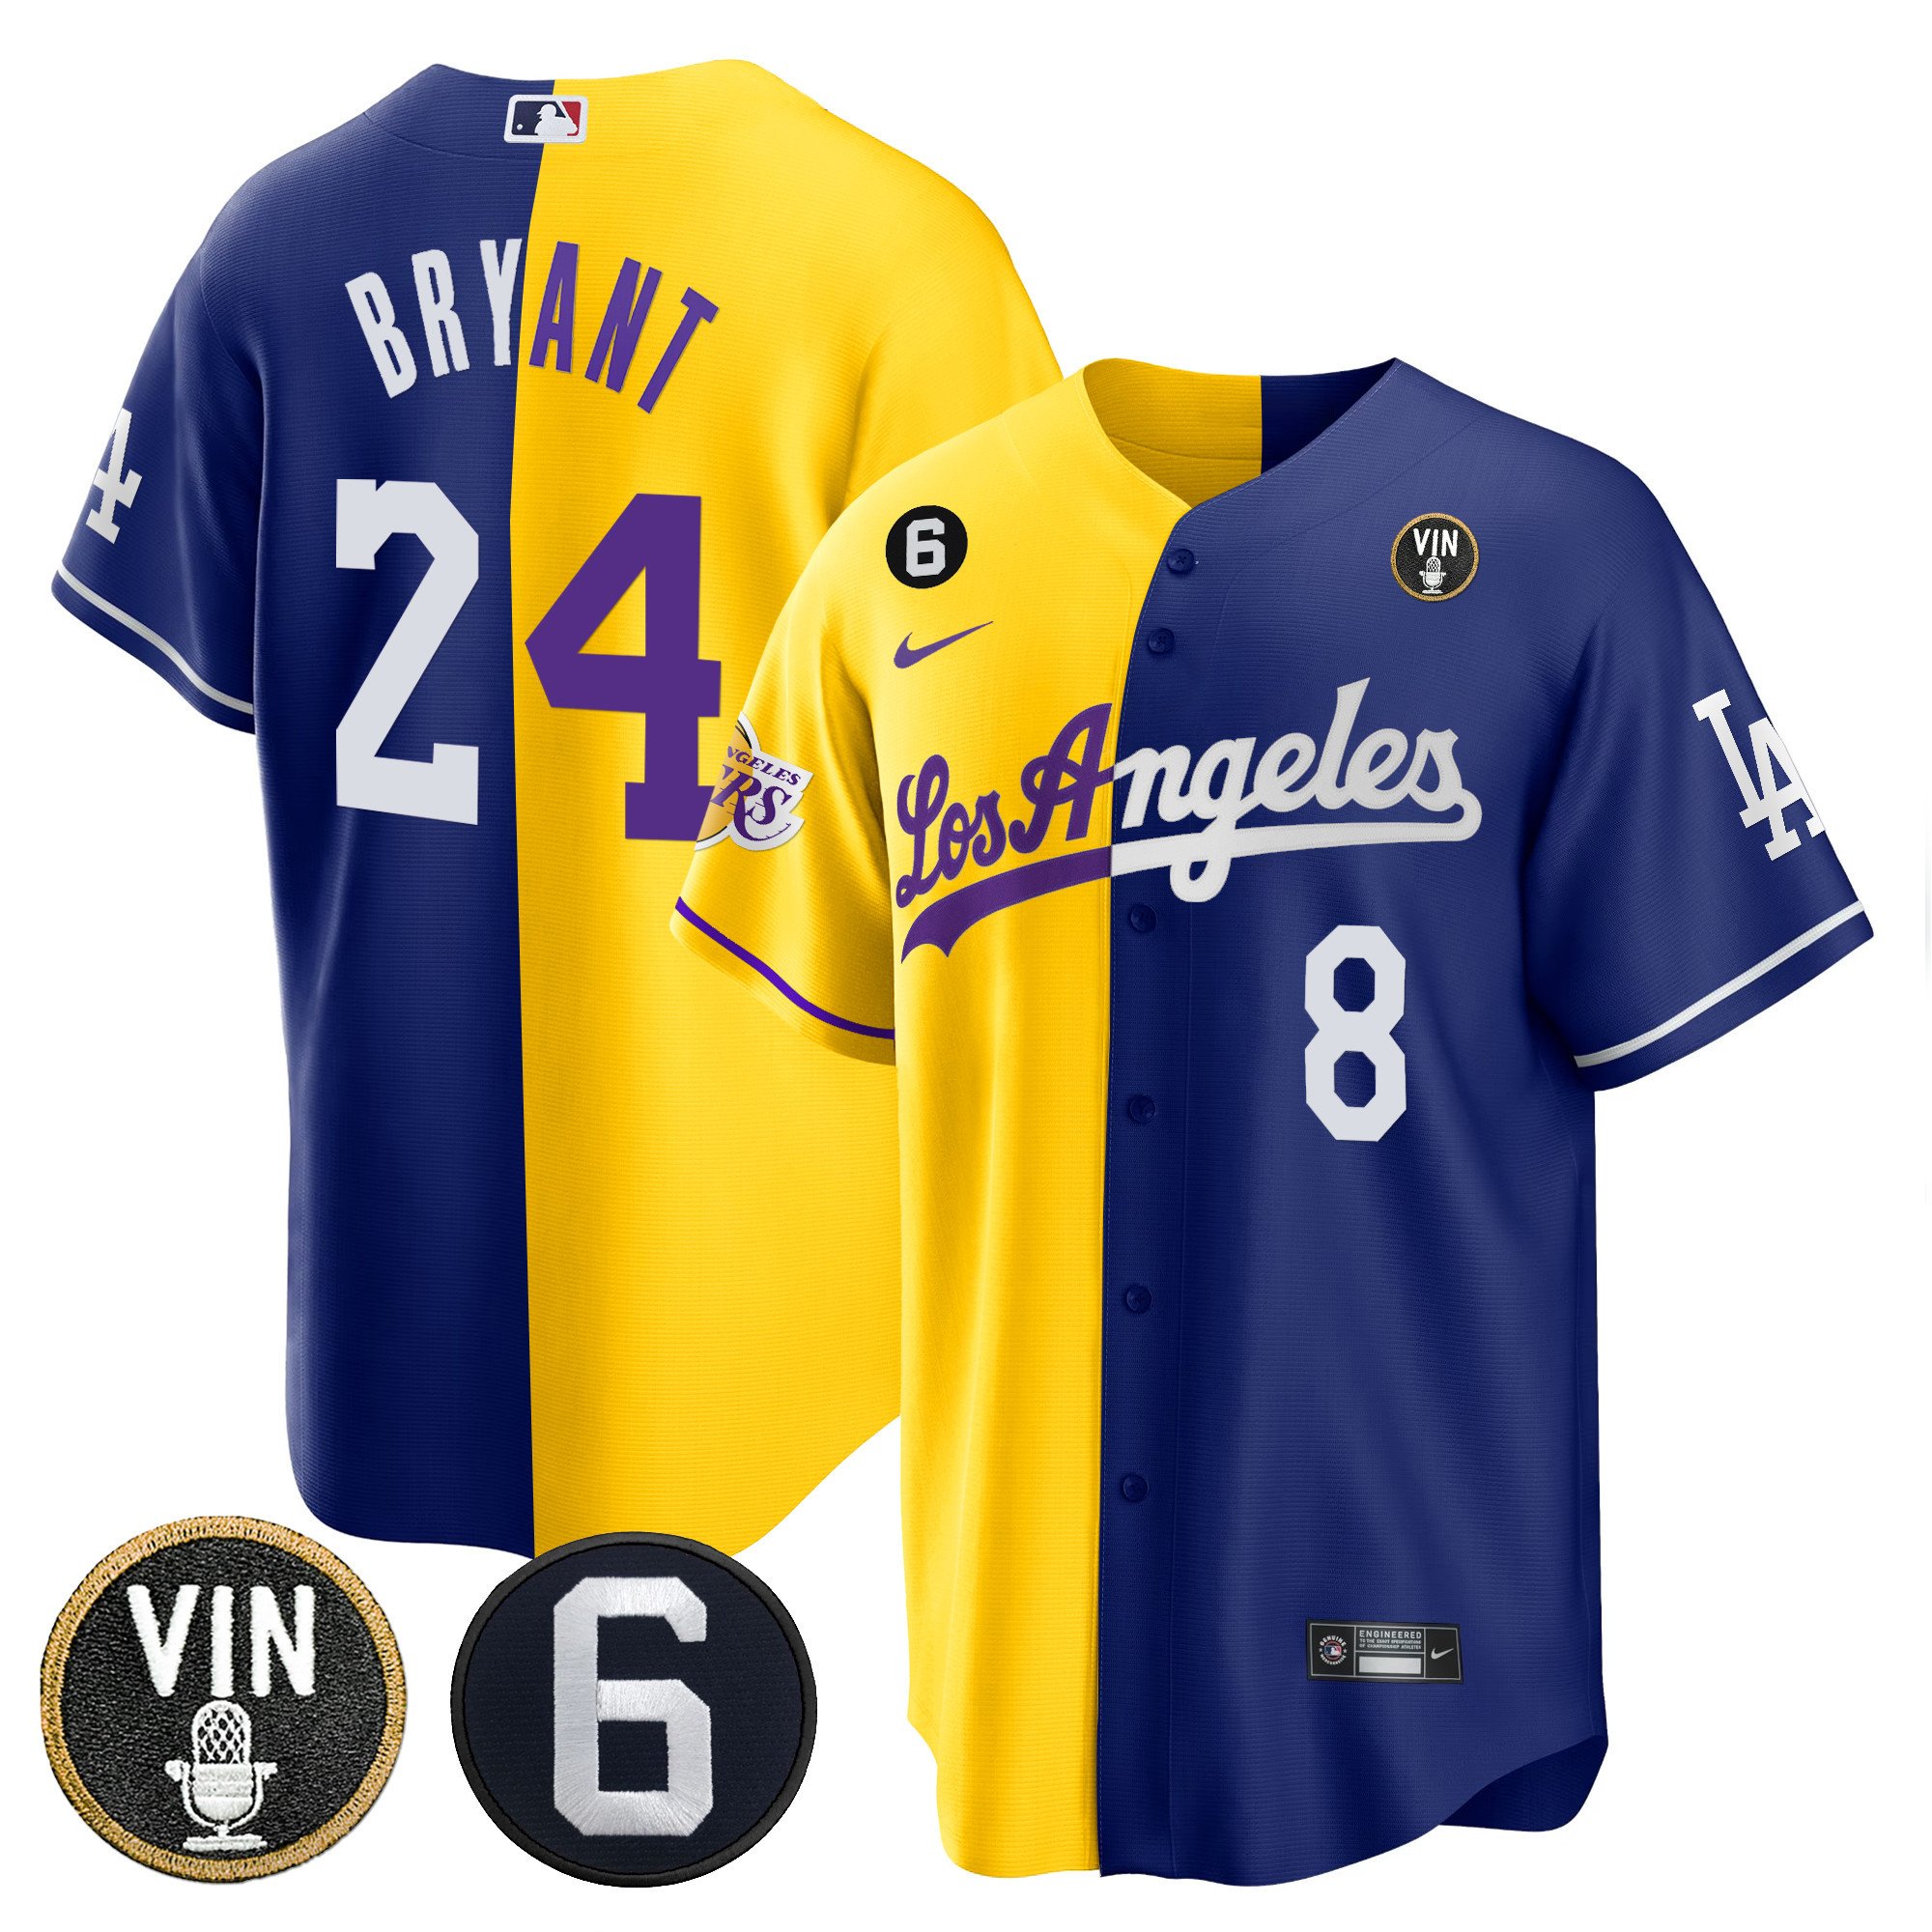 Los Angeles Dodgers #8/24 Kobe Bryant MLB Baseball Jersey -S.L.